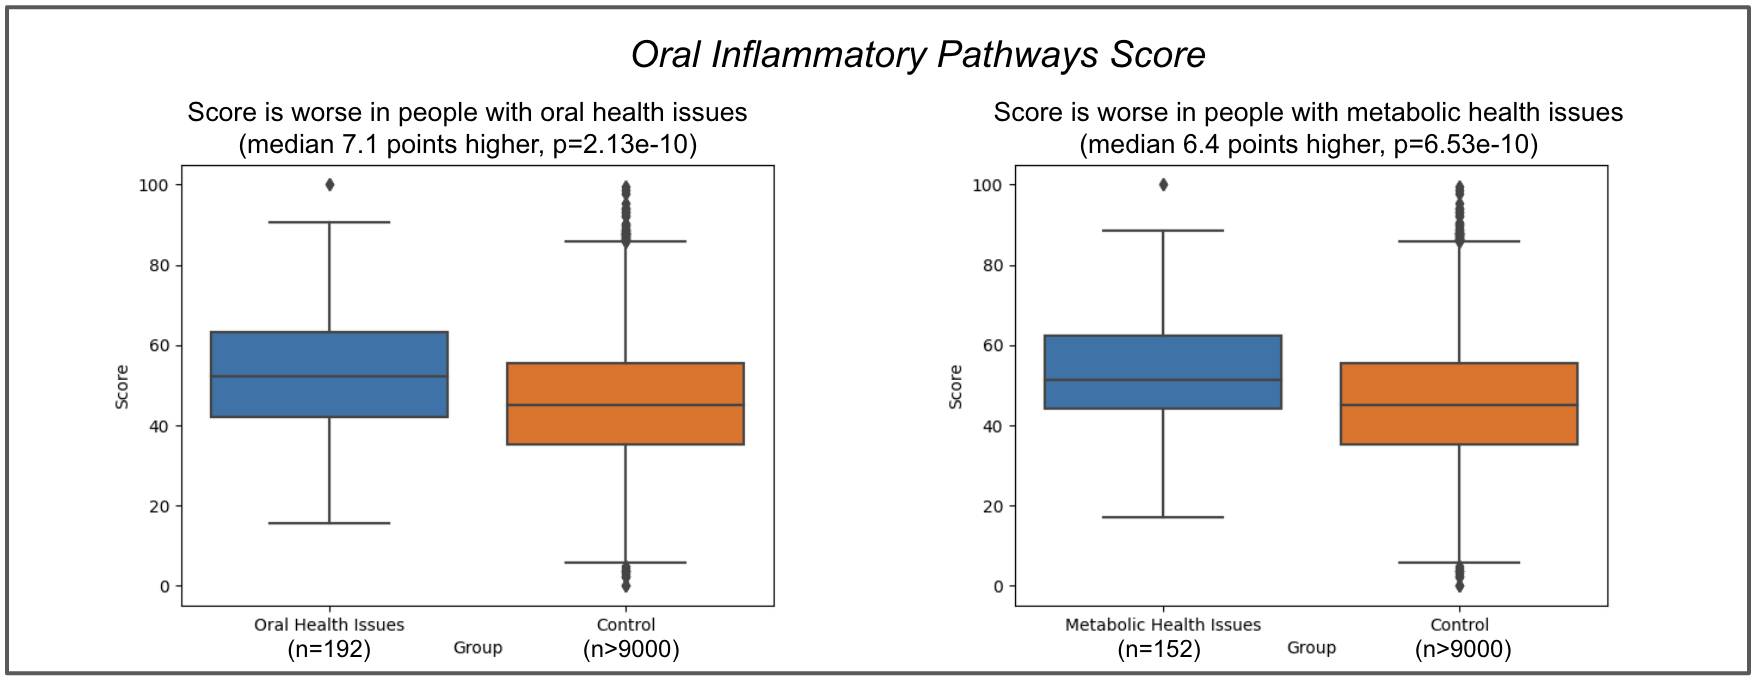 Oral Inflammatory Pathways Score